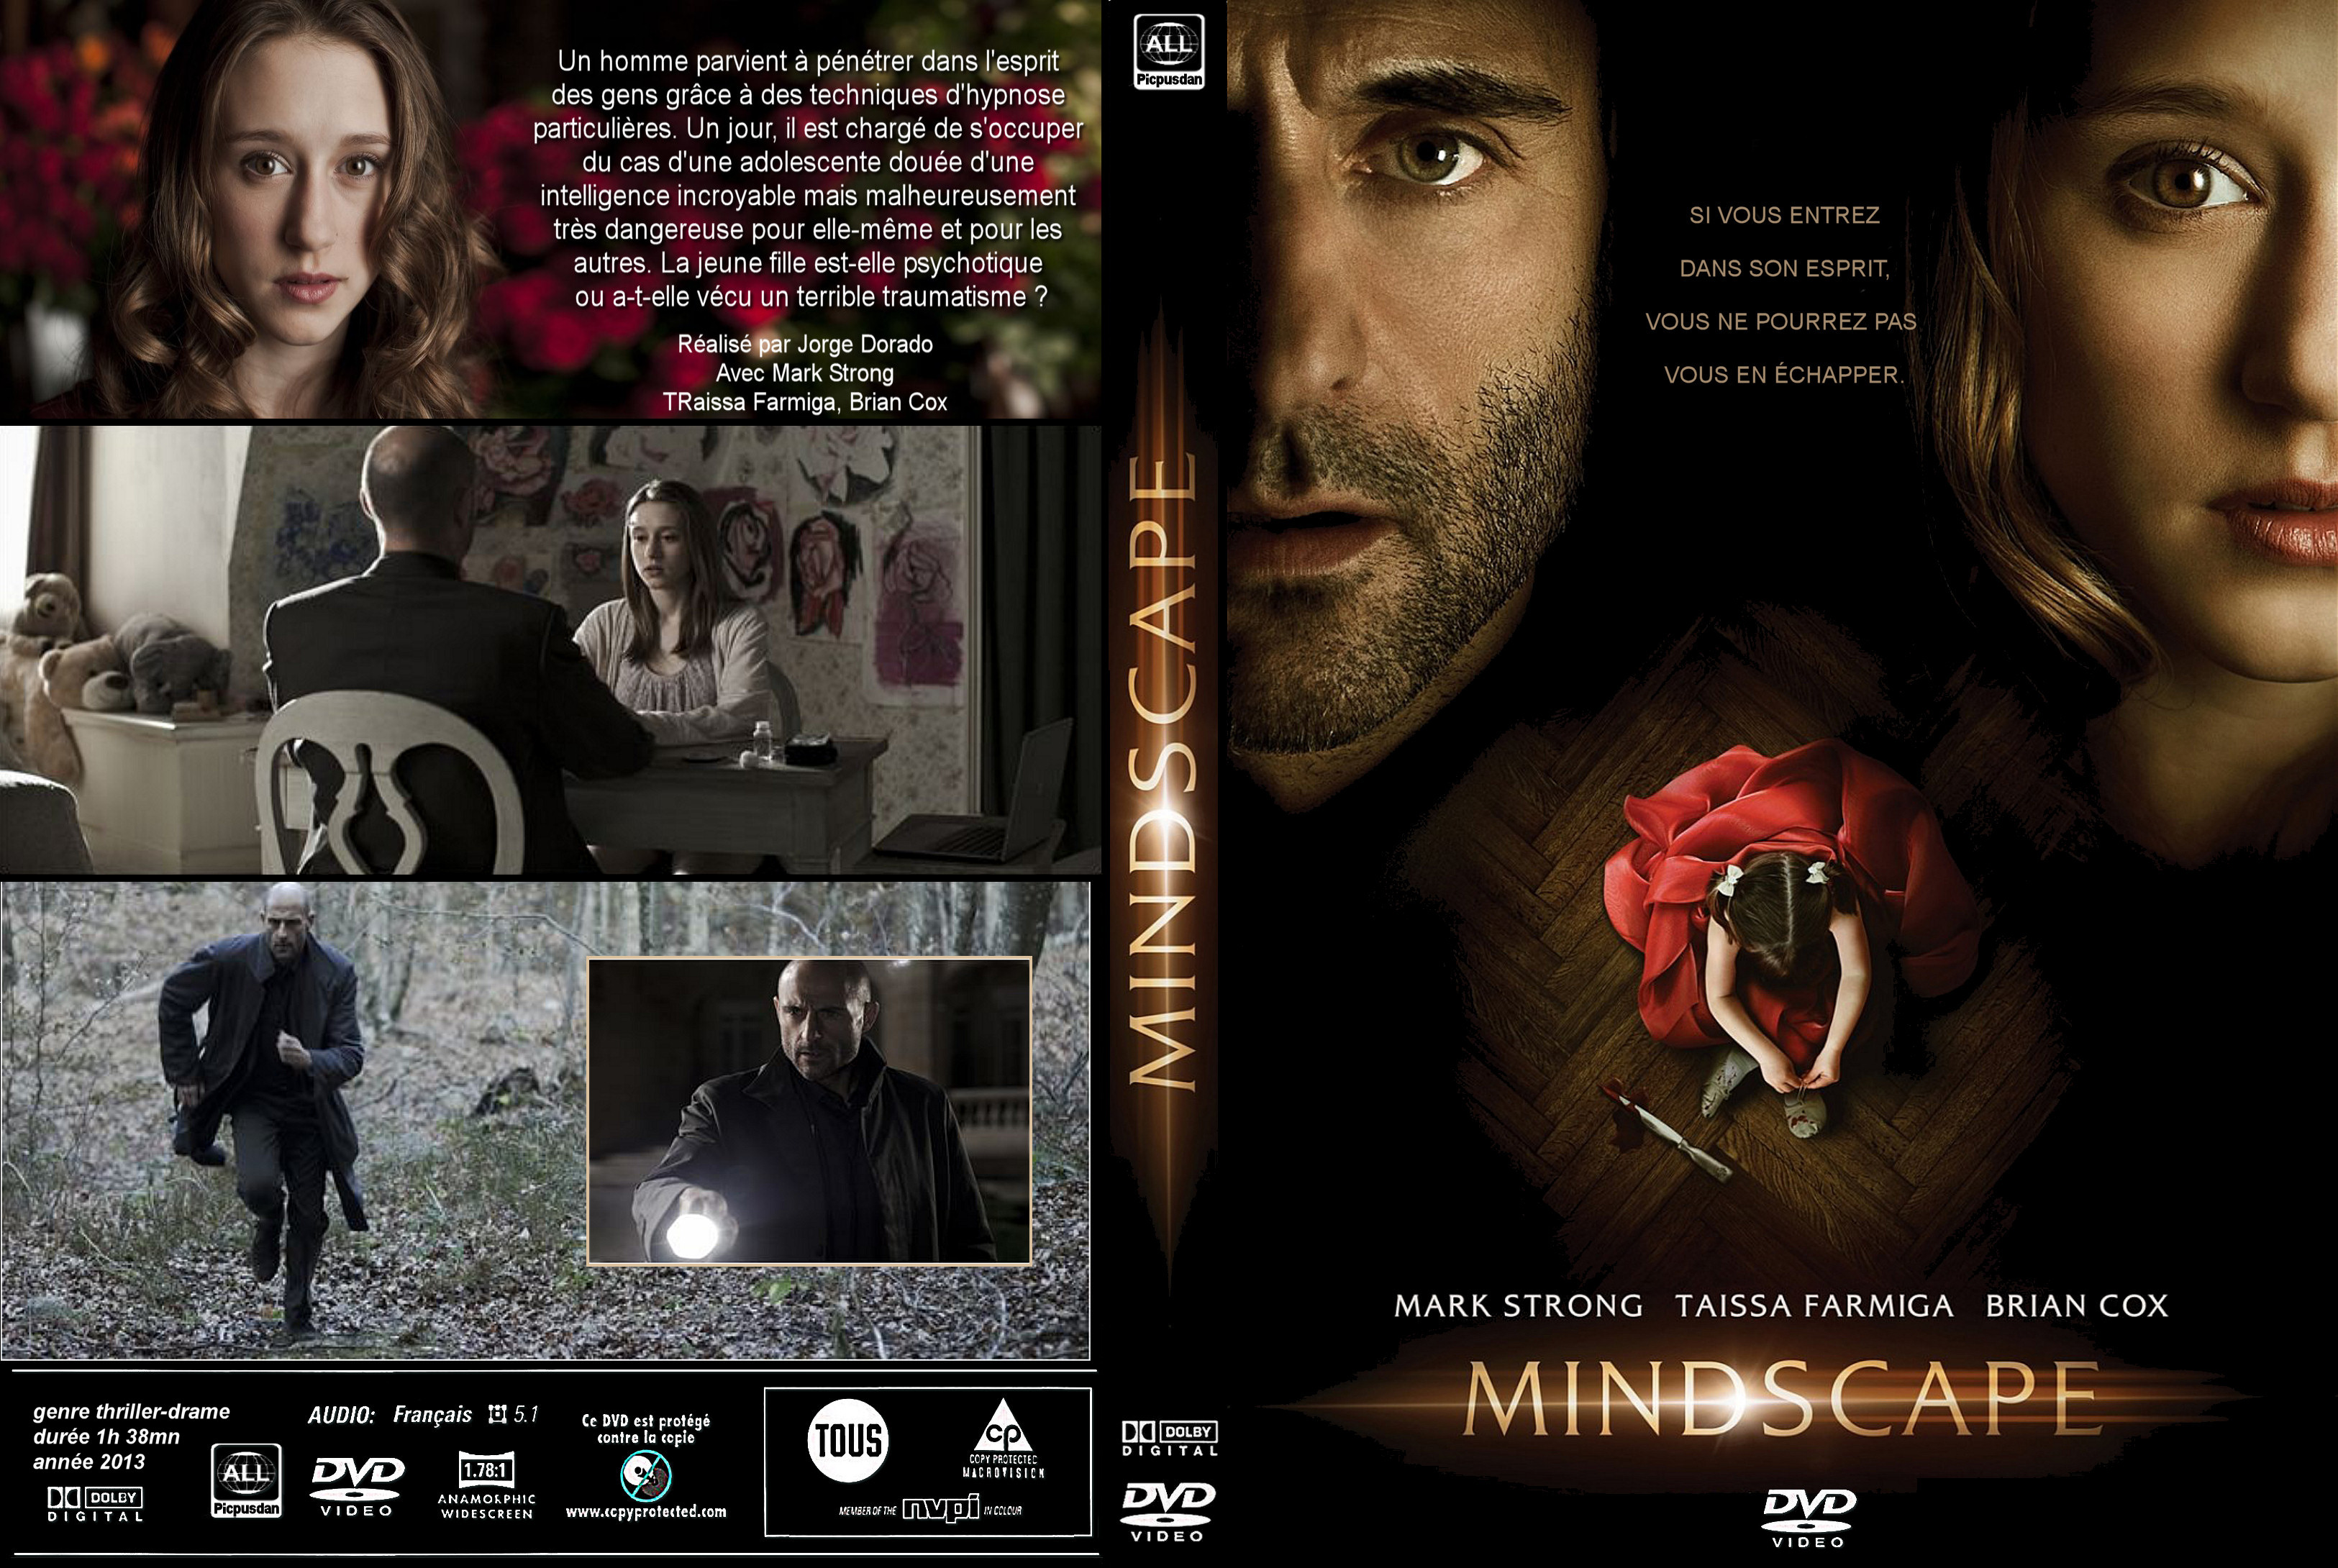 Jaquette DVD Mindscape custom